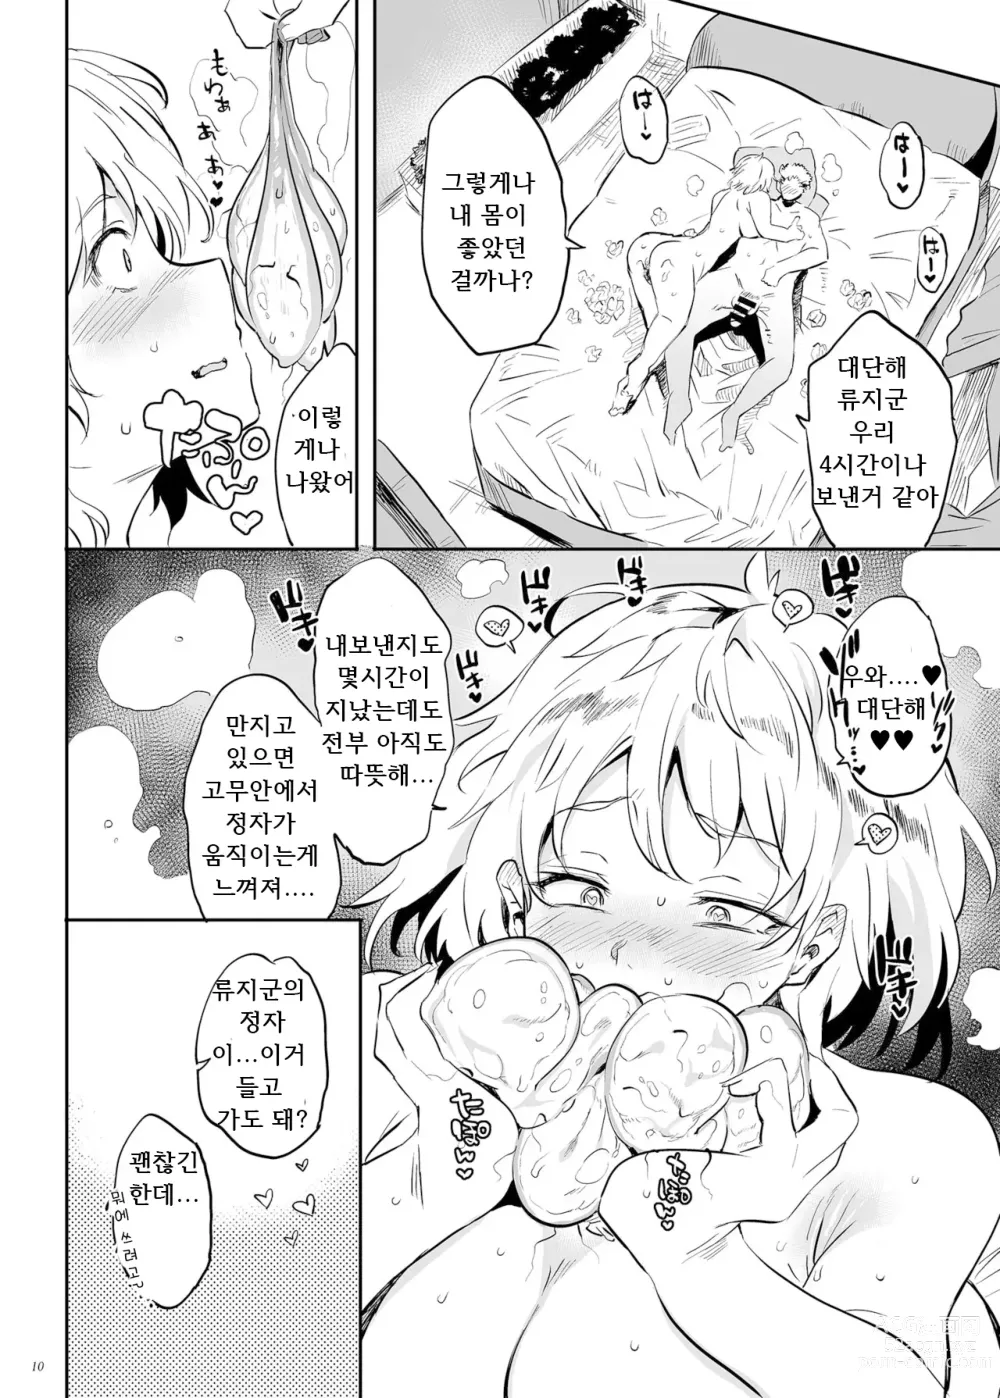 Page 10 of doujinshi 이거, 엄마입니다. 3